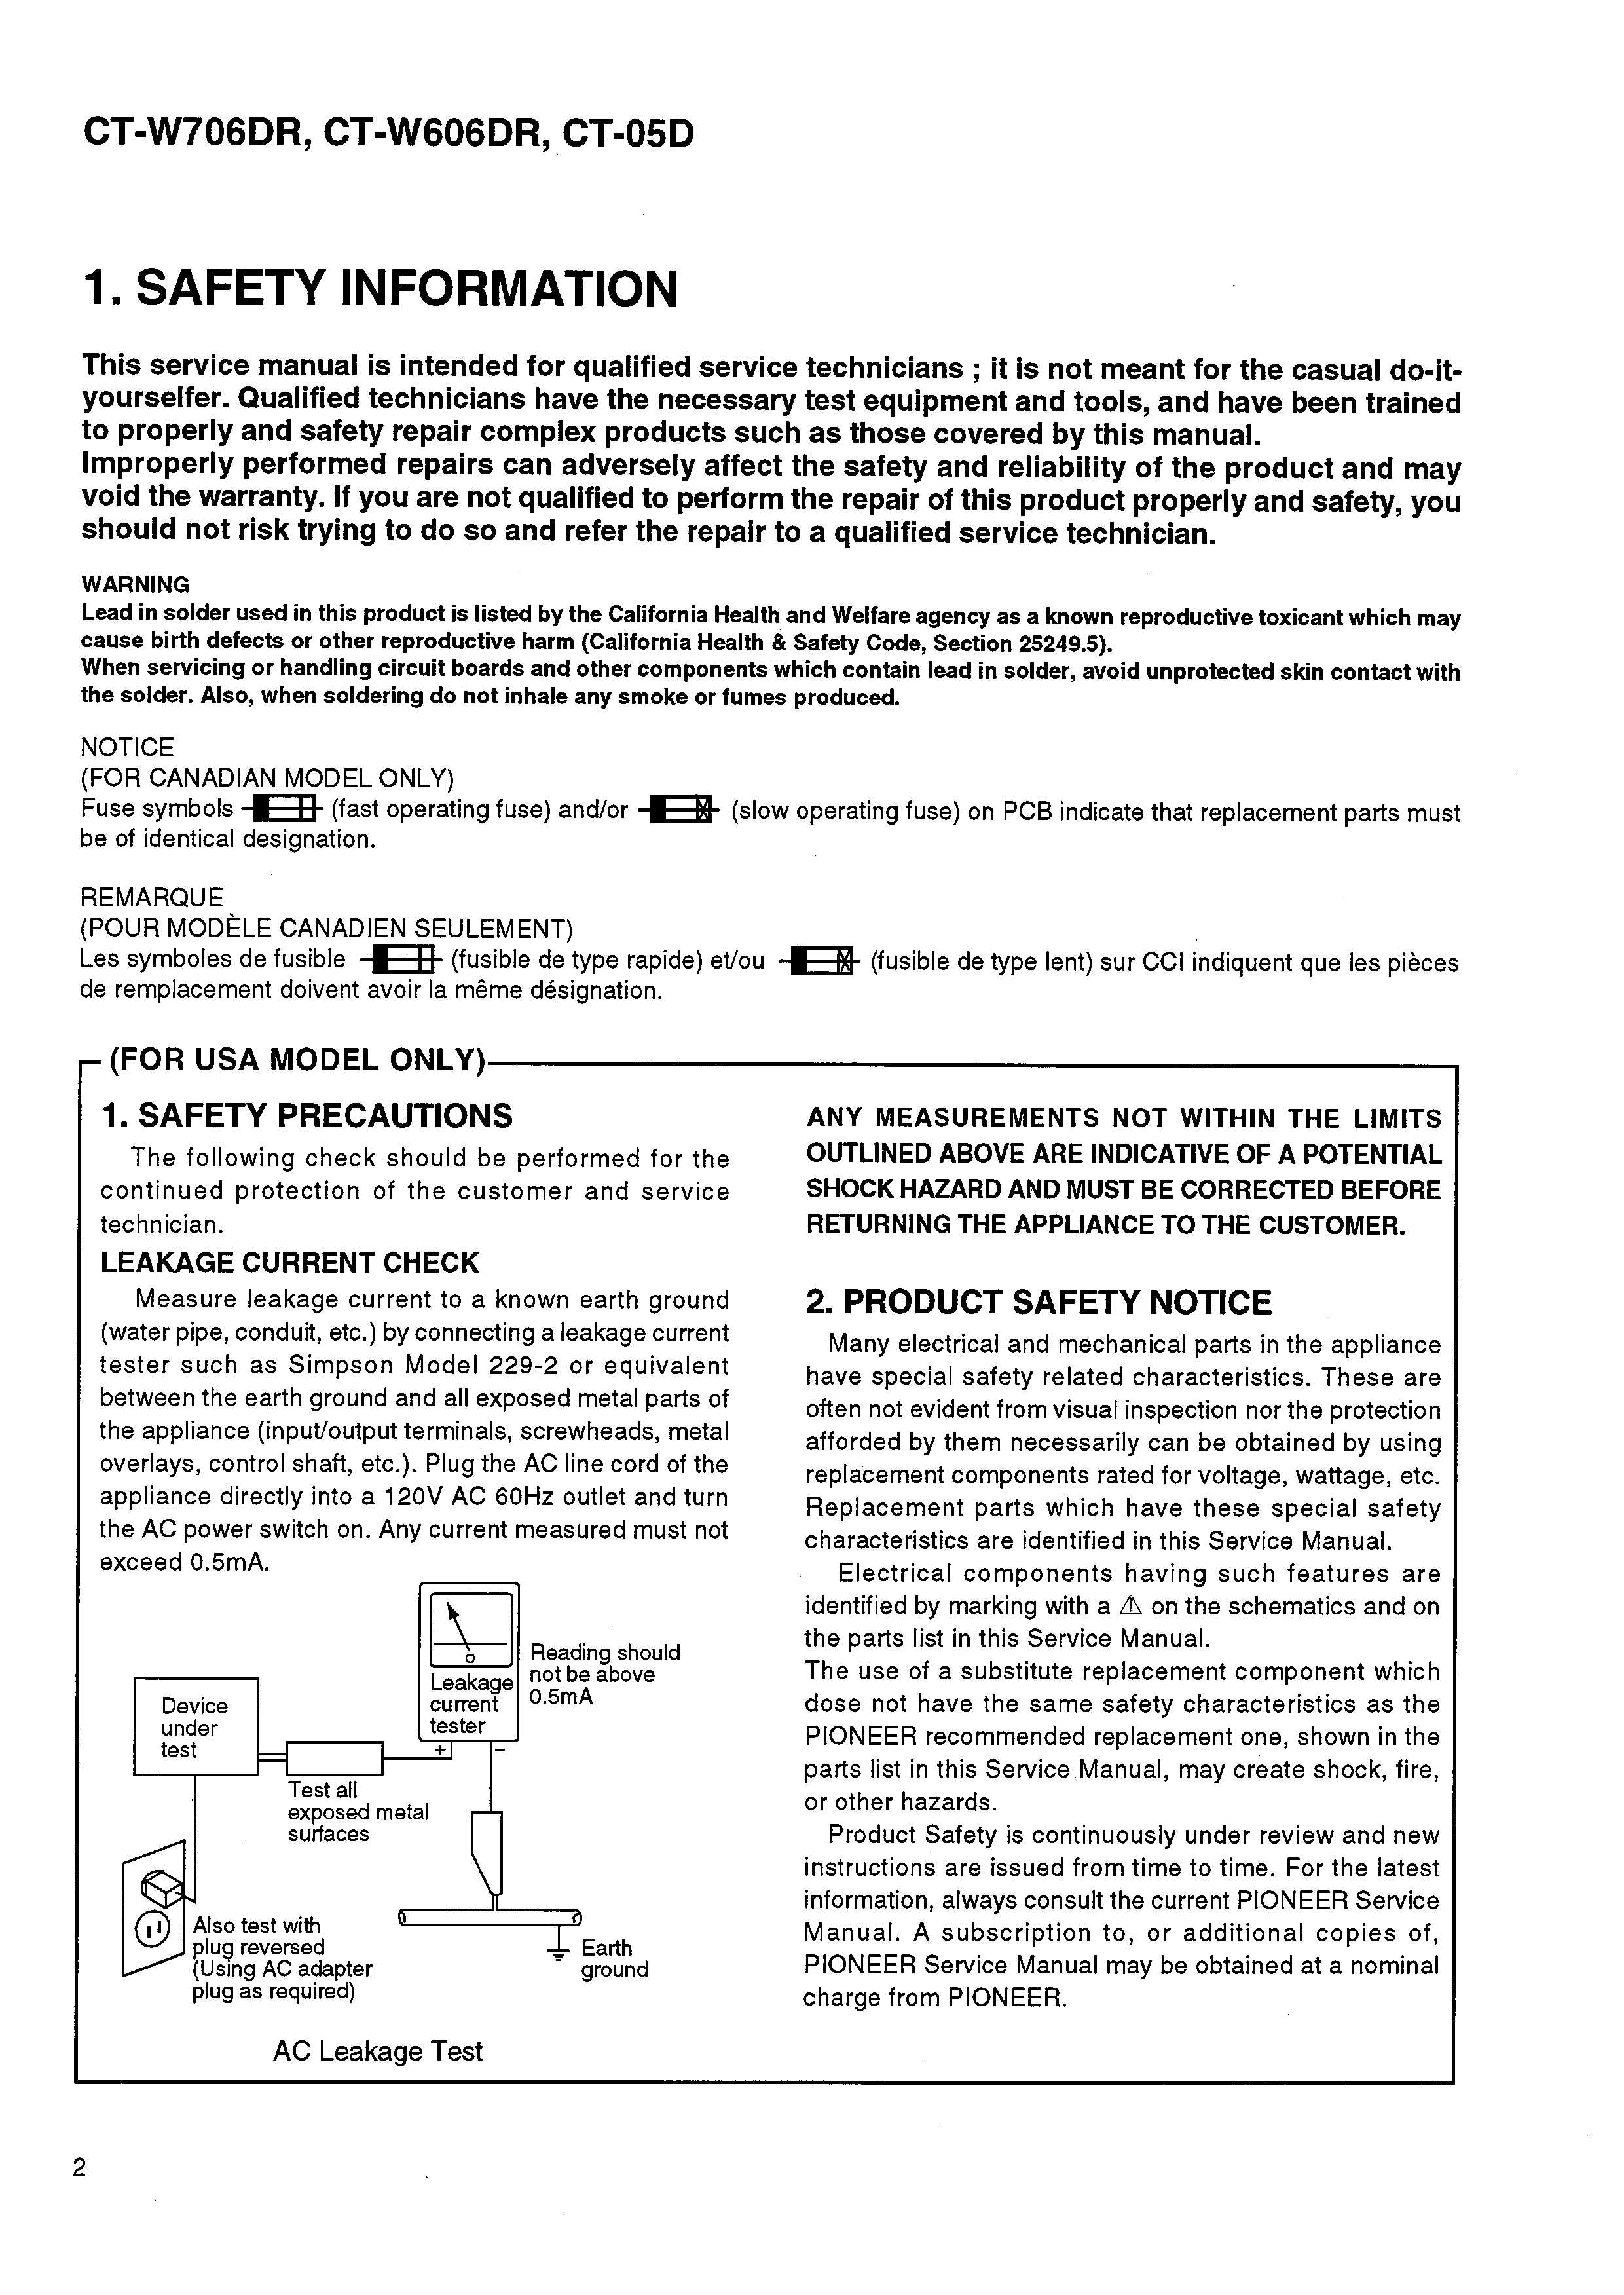 Сервисная инструкция Pioneer CT-05D, CT-W606DR, CT-W706DR